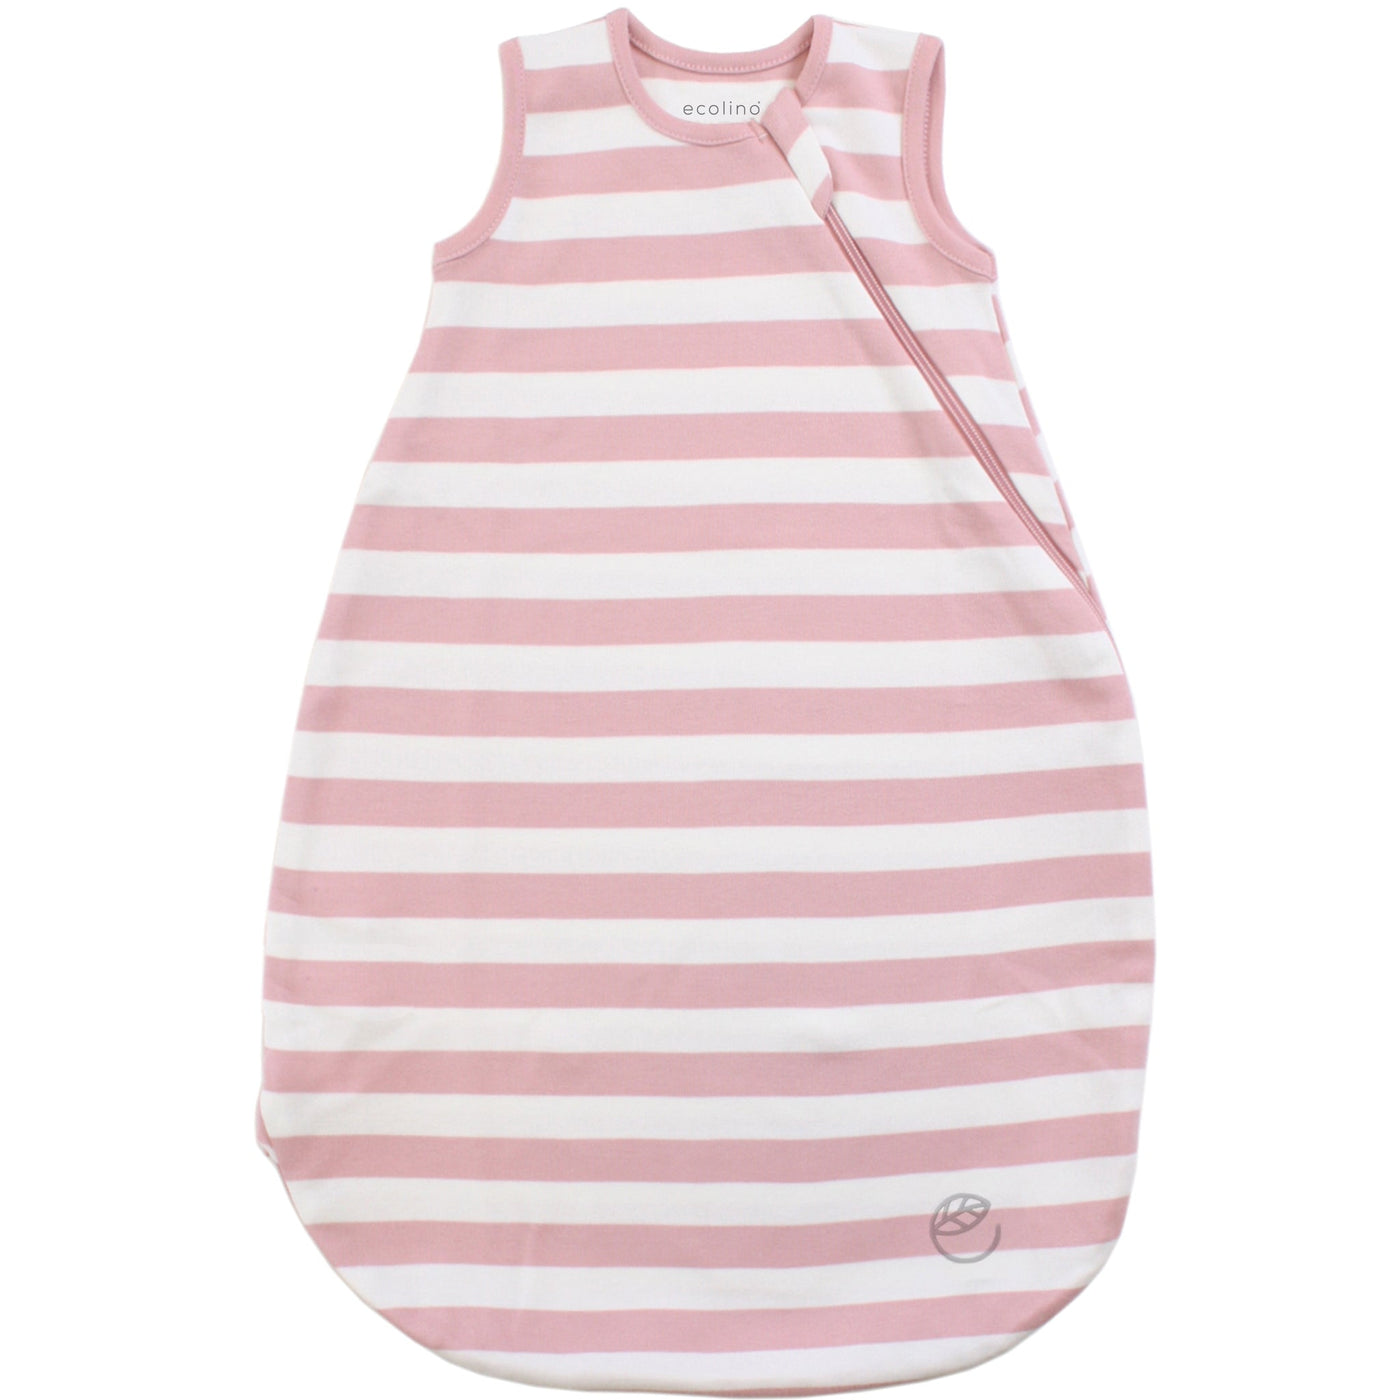 Ecolino® Organic Cotton Basic Baby Sleep Bag or Sack, Blush